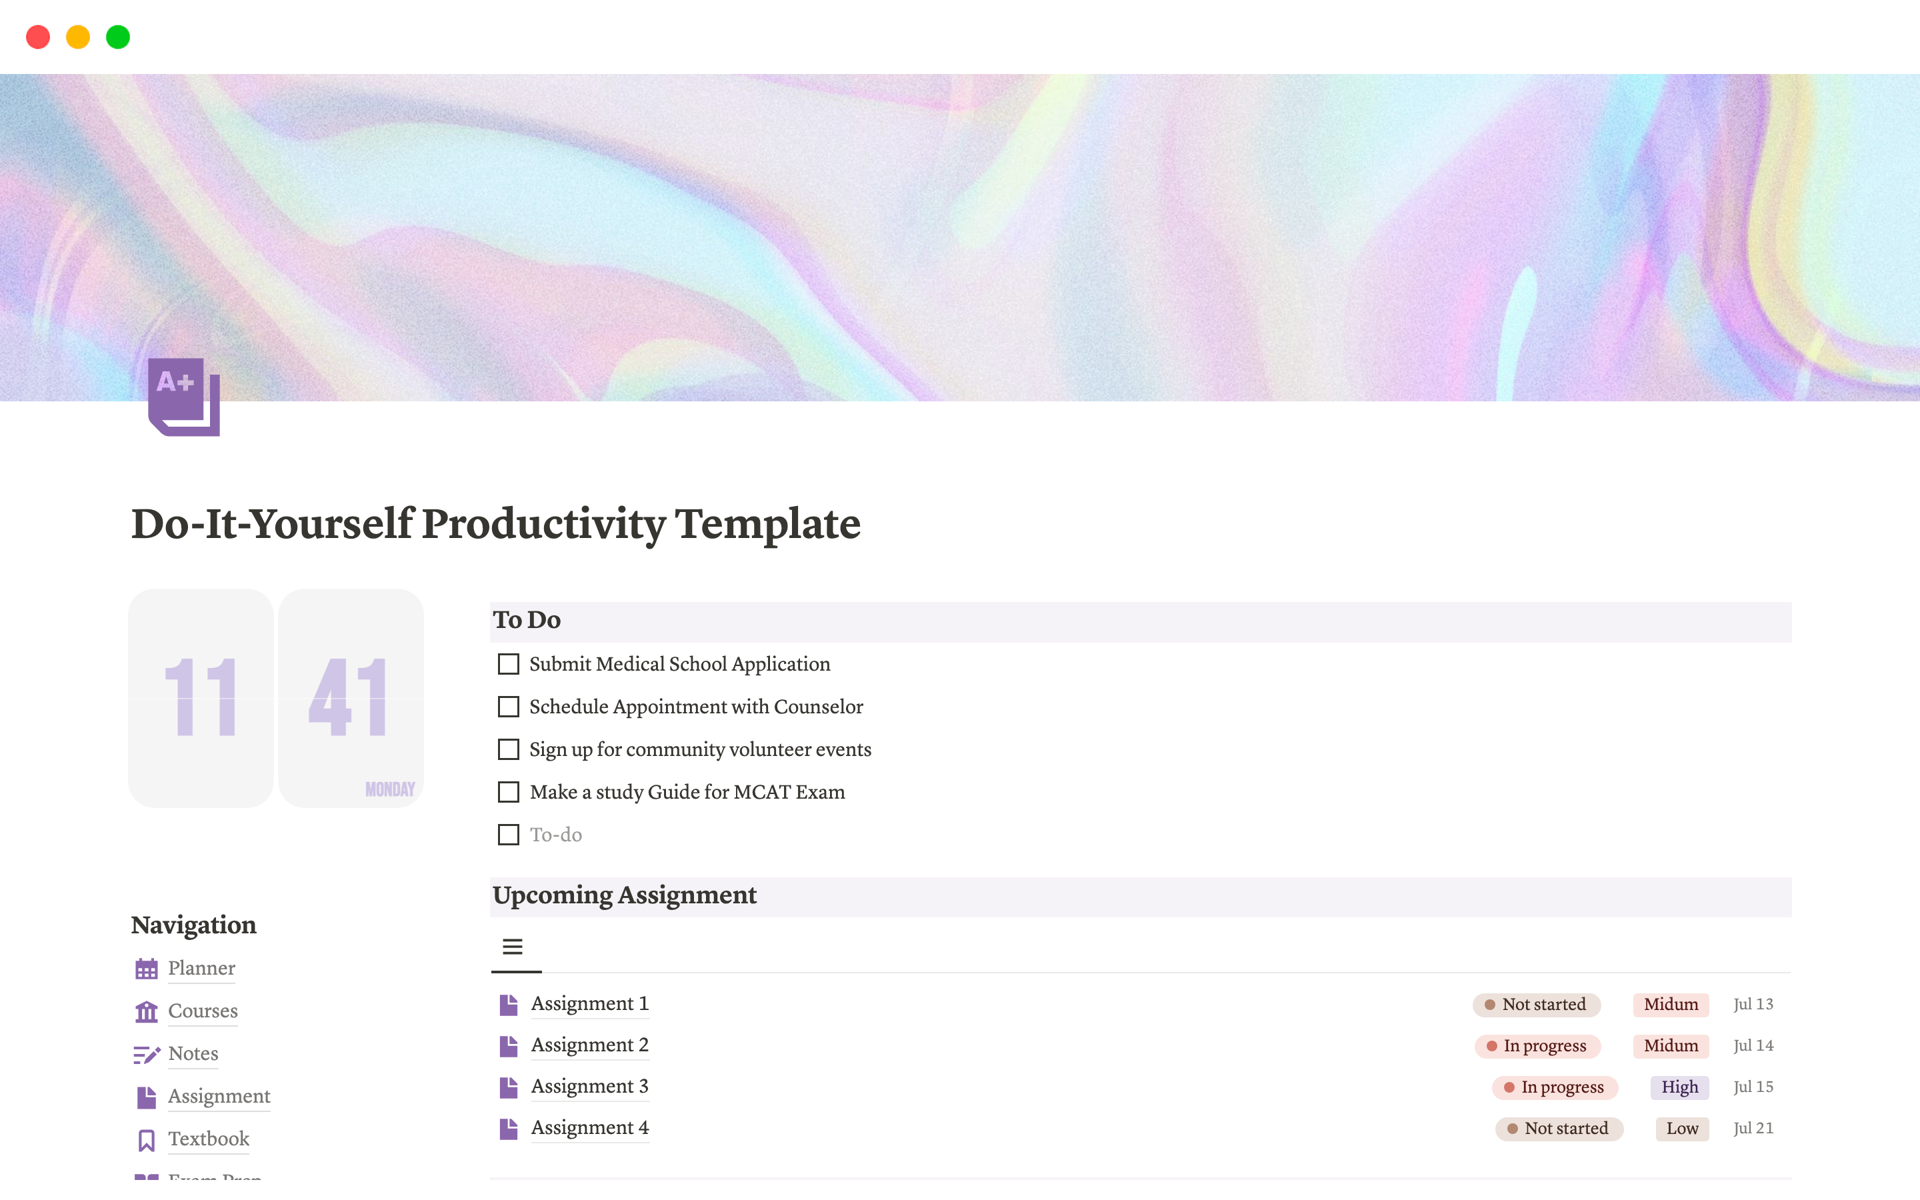 Vista previa de una plantilla para Do-It-Yourself Productivity Template for Students